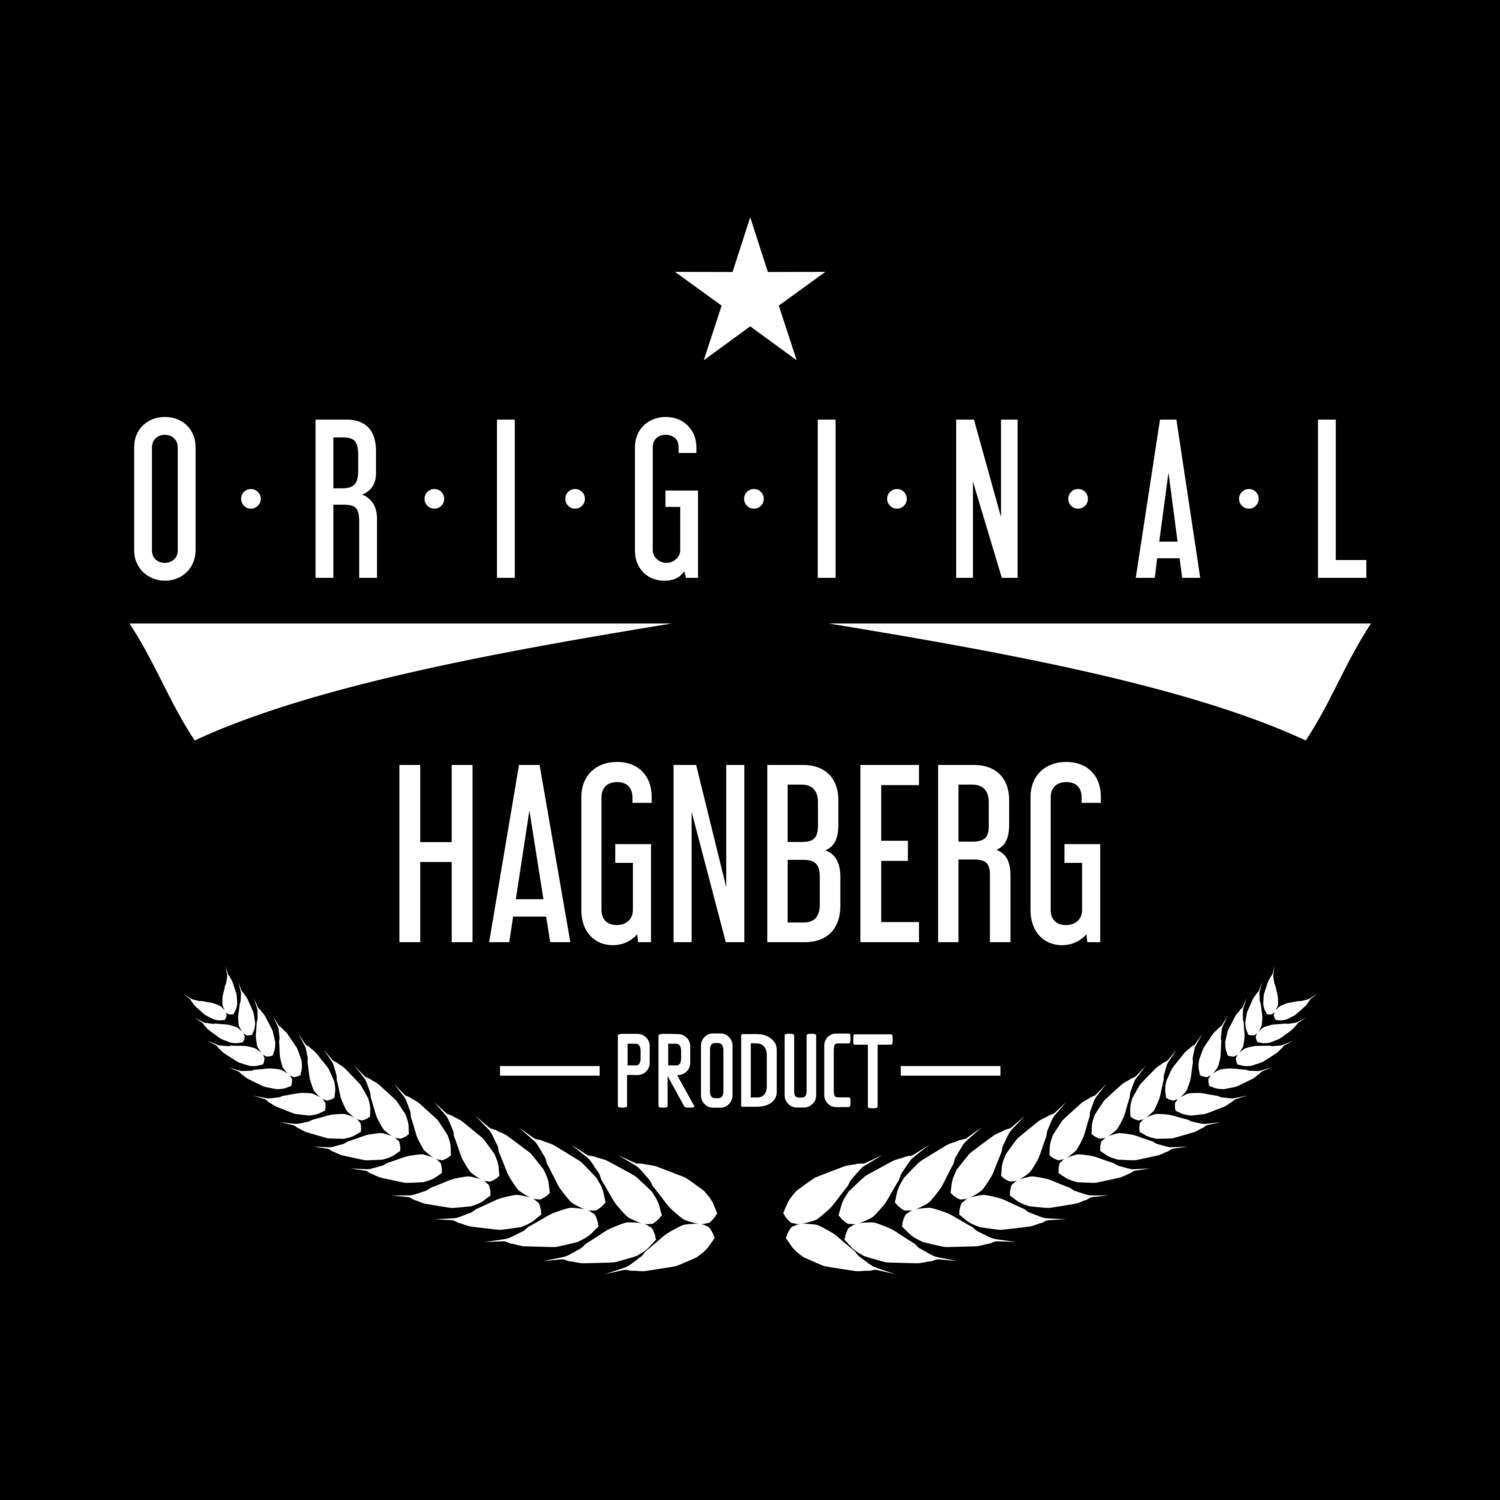 Hagnberg T-Shirt »Original Product«